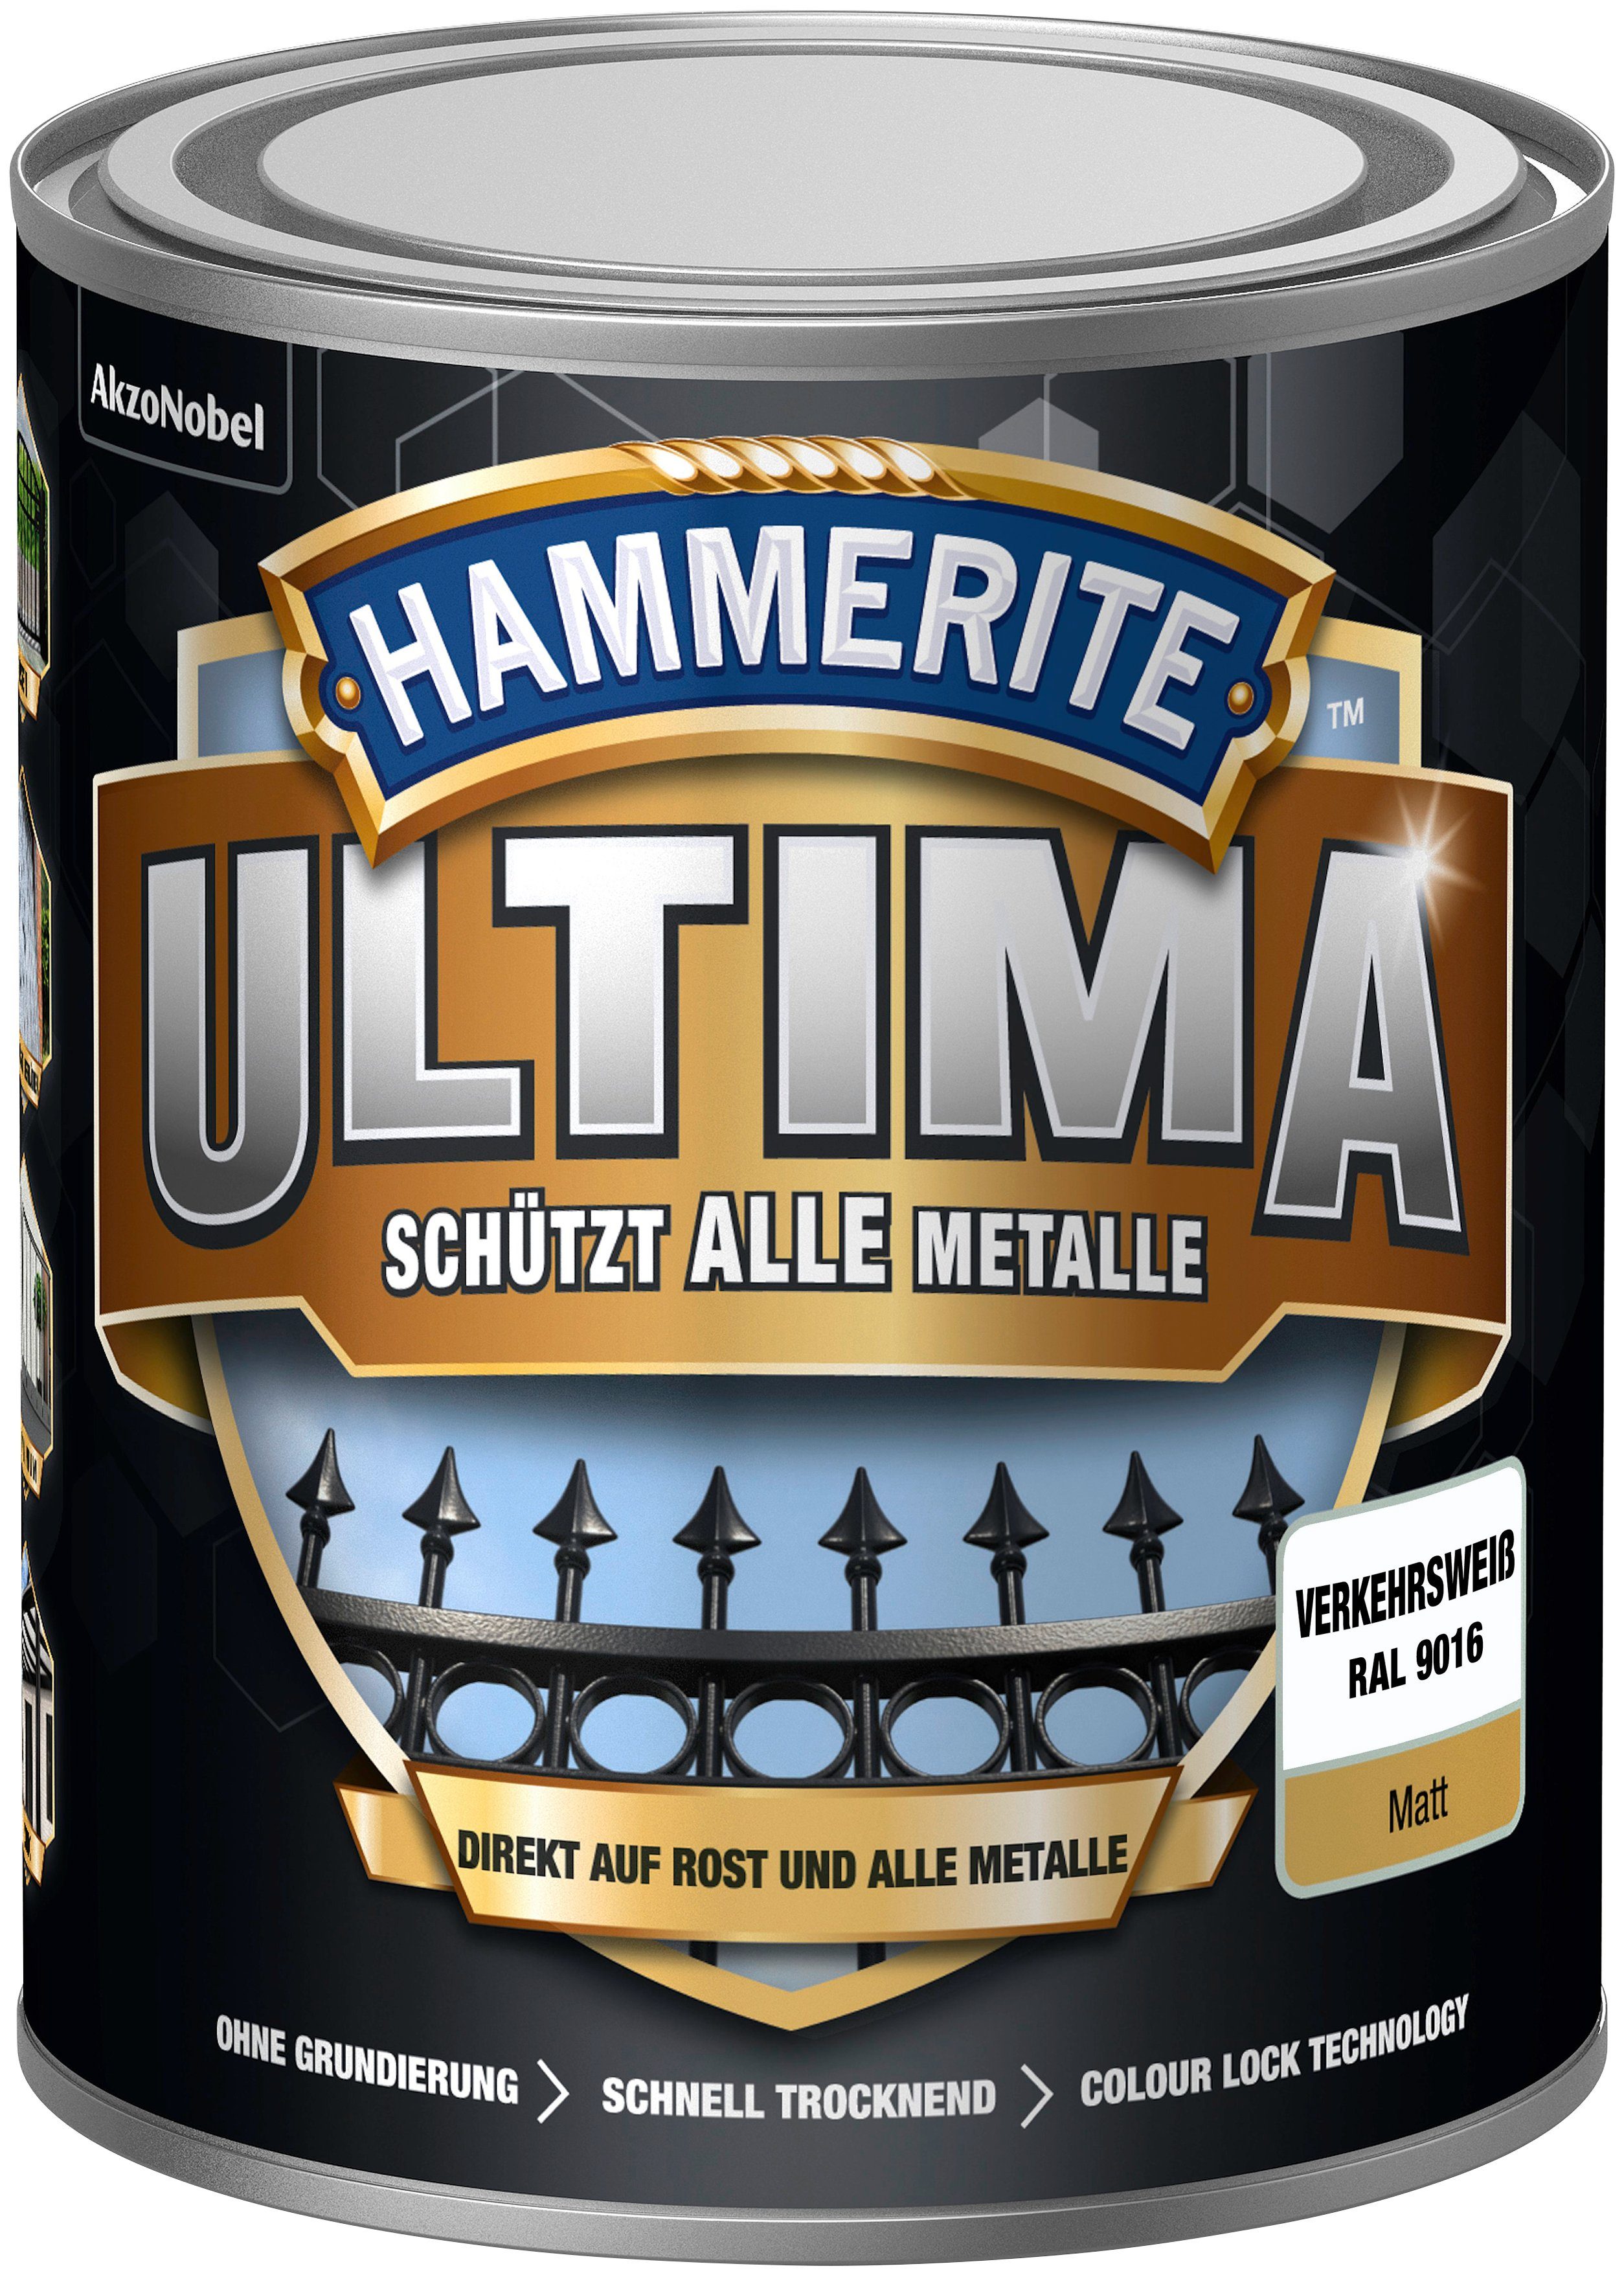 Hammerite  Metallschutzlack ULTIMA schützt alle Metalle, 3in1, verkehrsweiss RAL 9016, matt